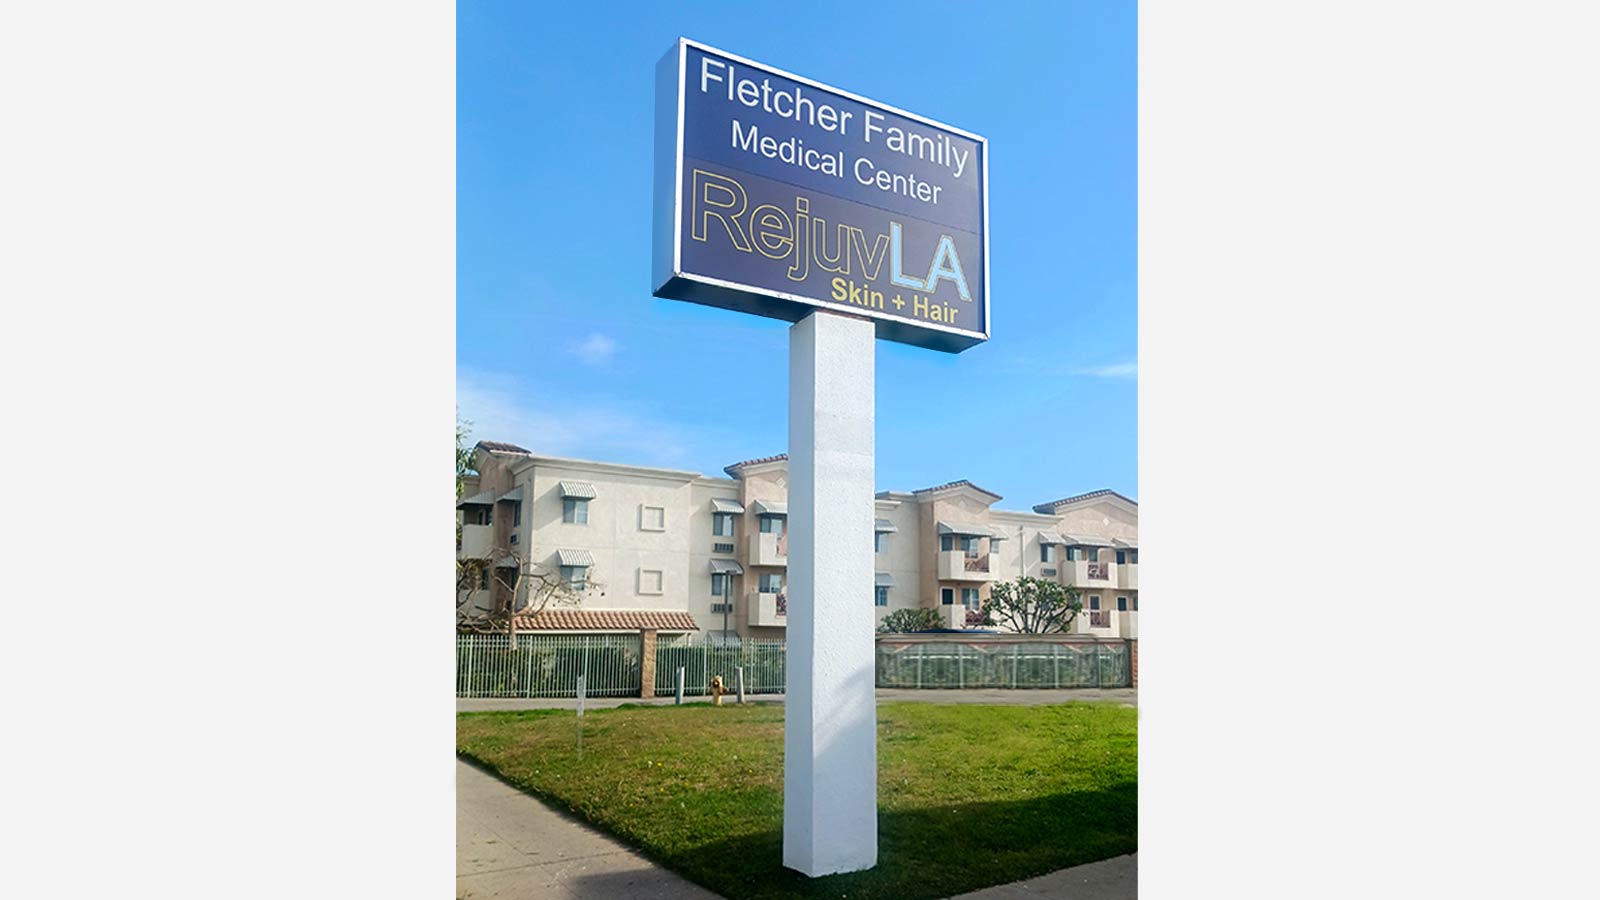 fletcher family medical center pylon sign installed outdoors